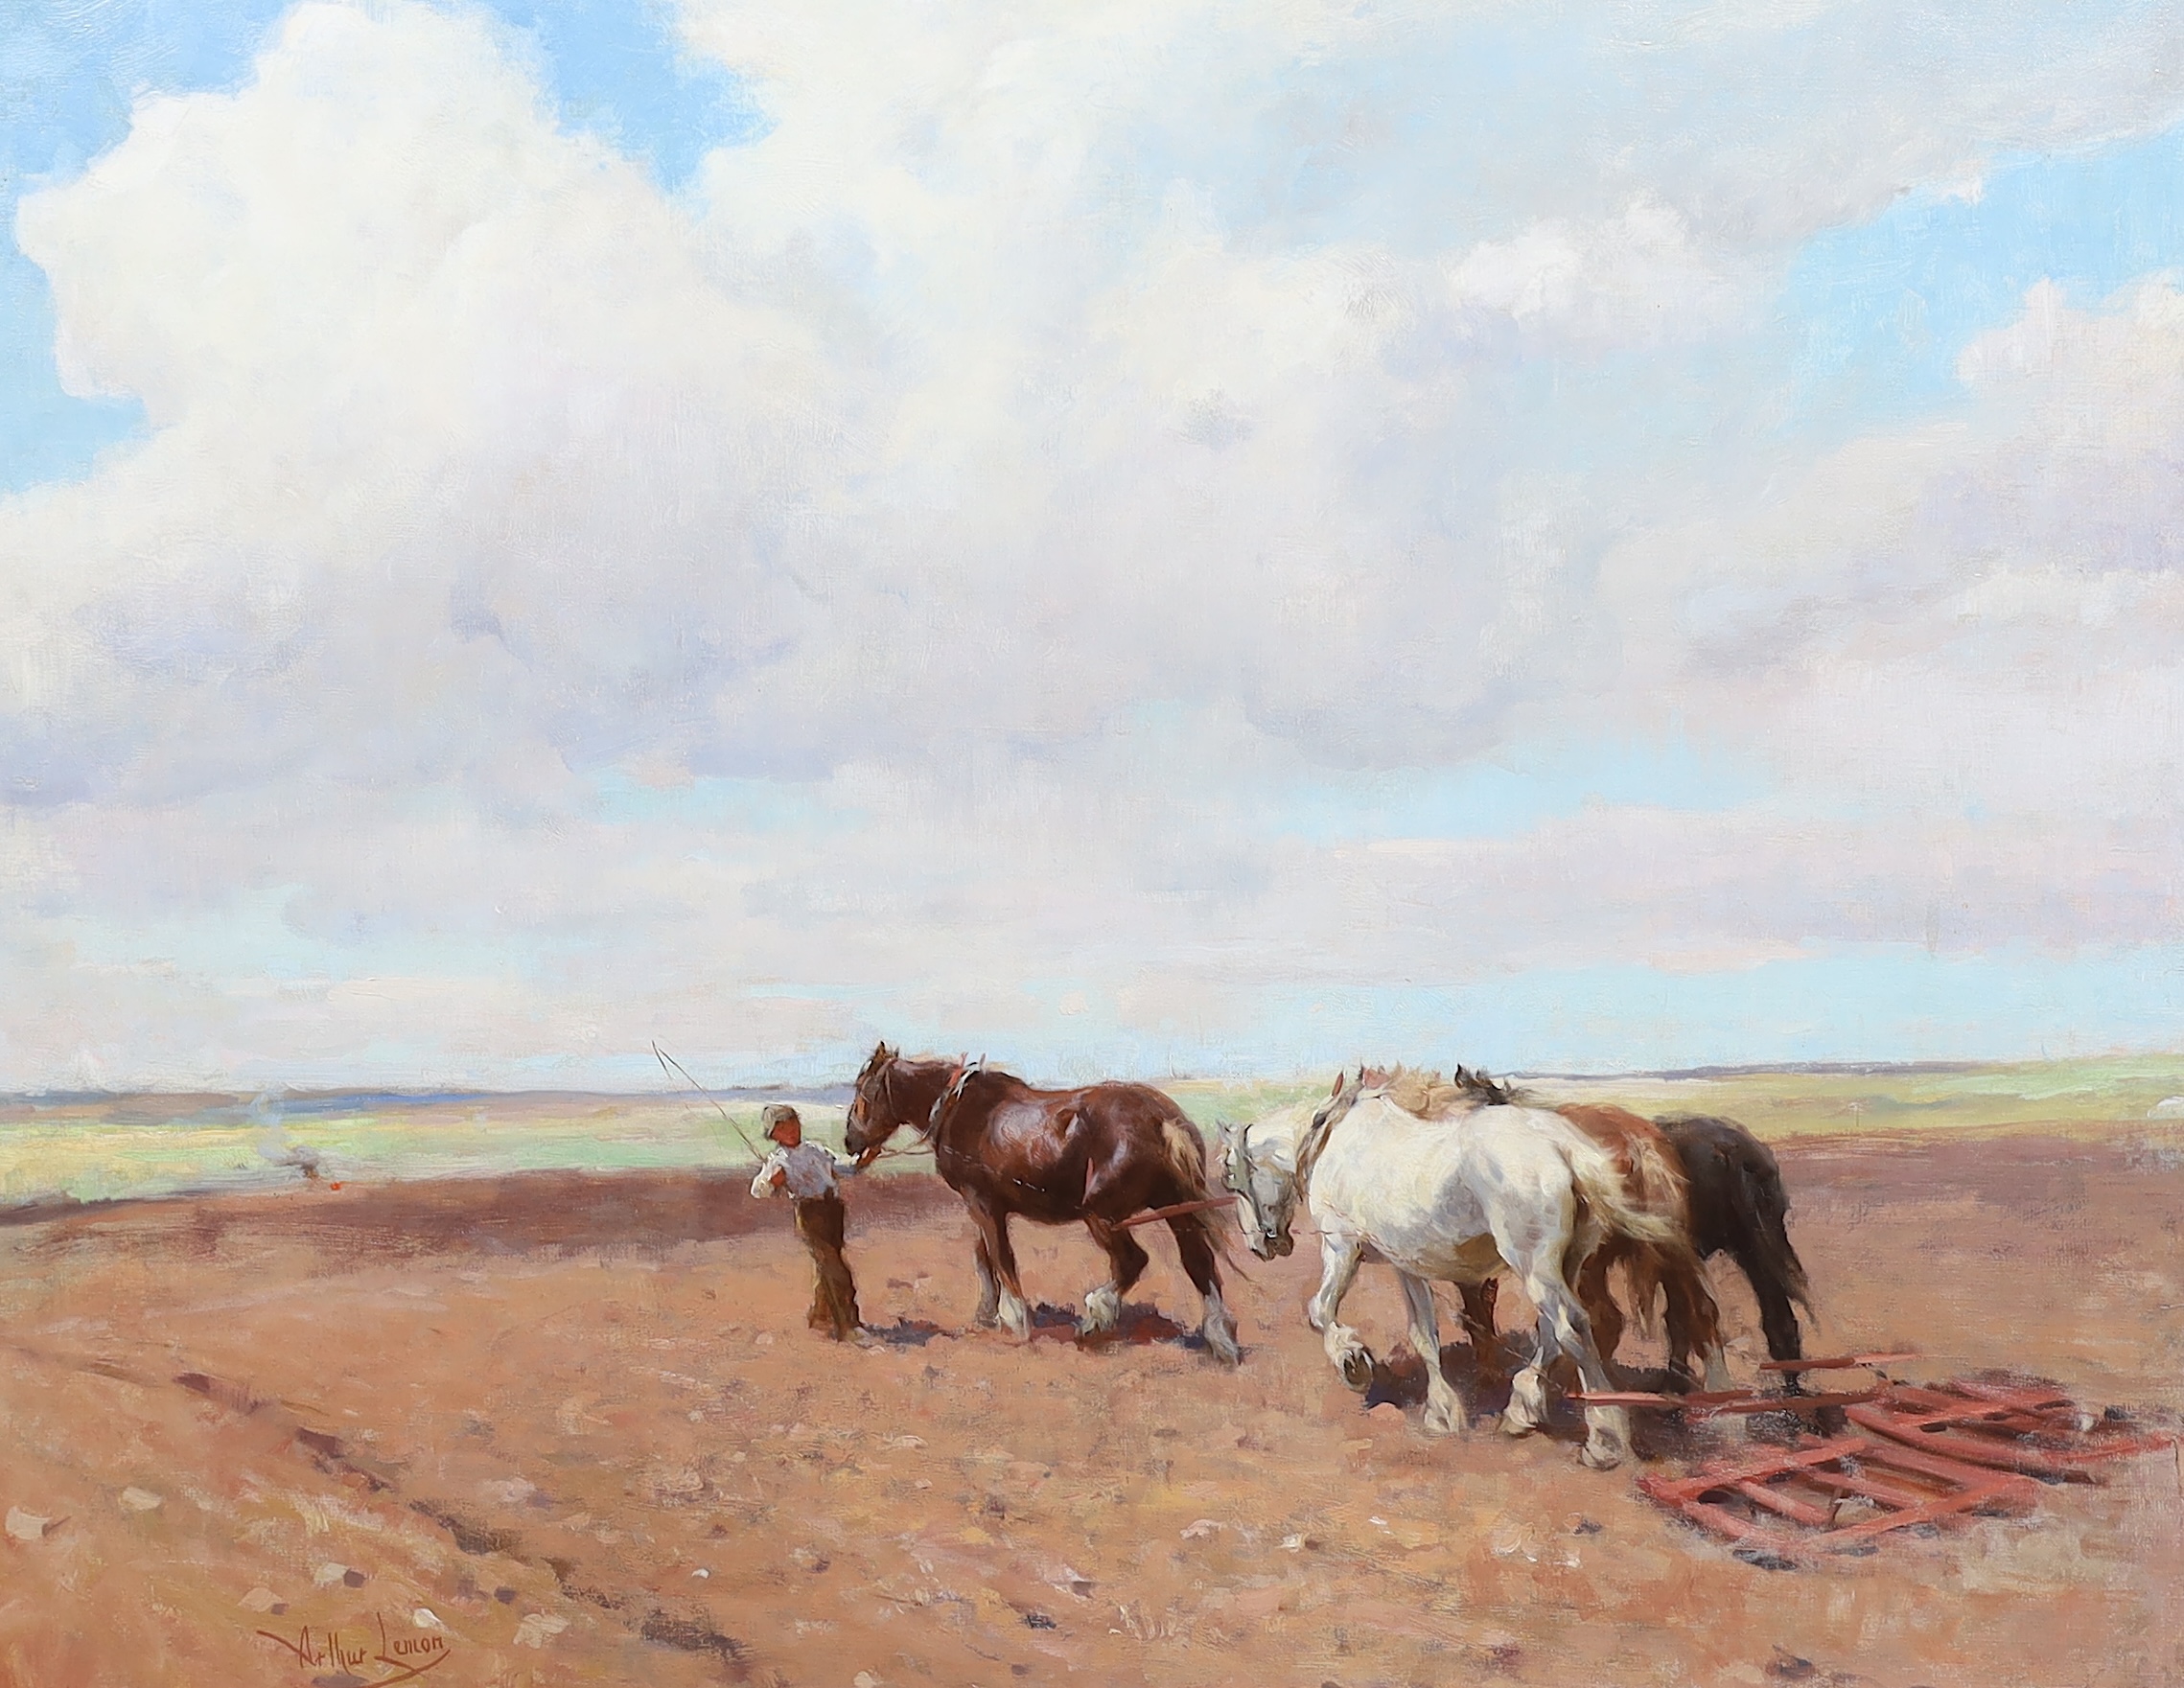 Arthur Lemon (British, 1850-1912), 'Harrowing the field', oil on canvas, 70 x 91cm